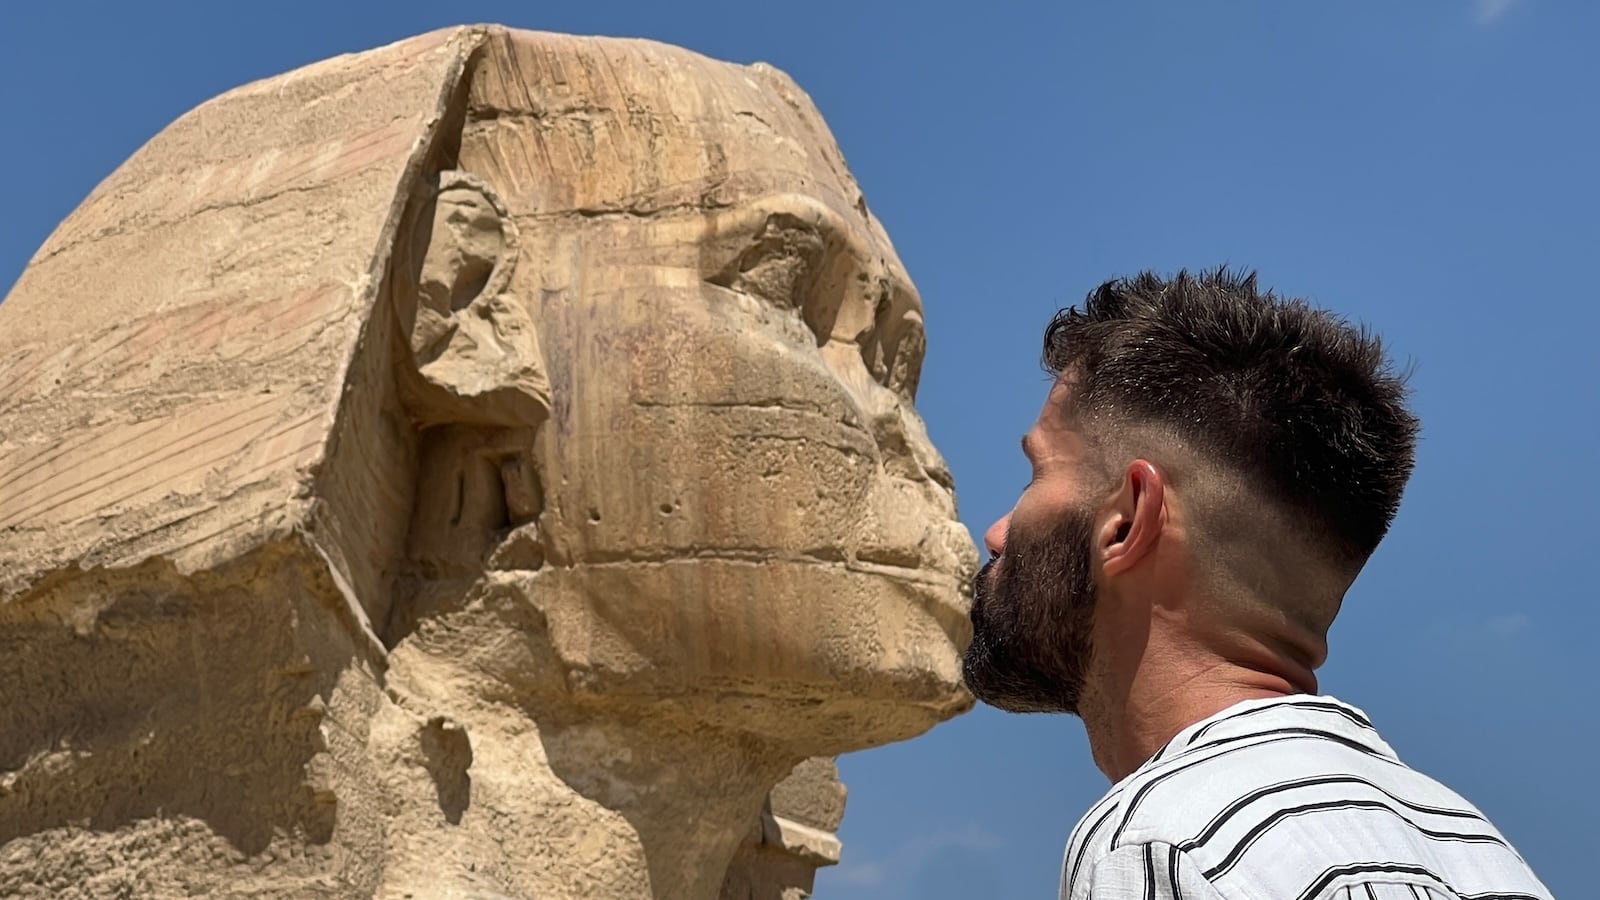 Seby kissing the Sphinx statue in Giza.